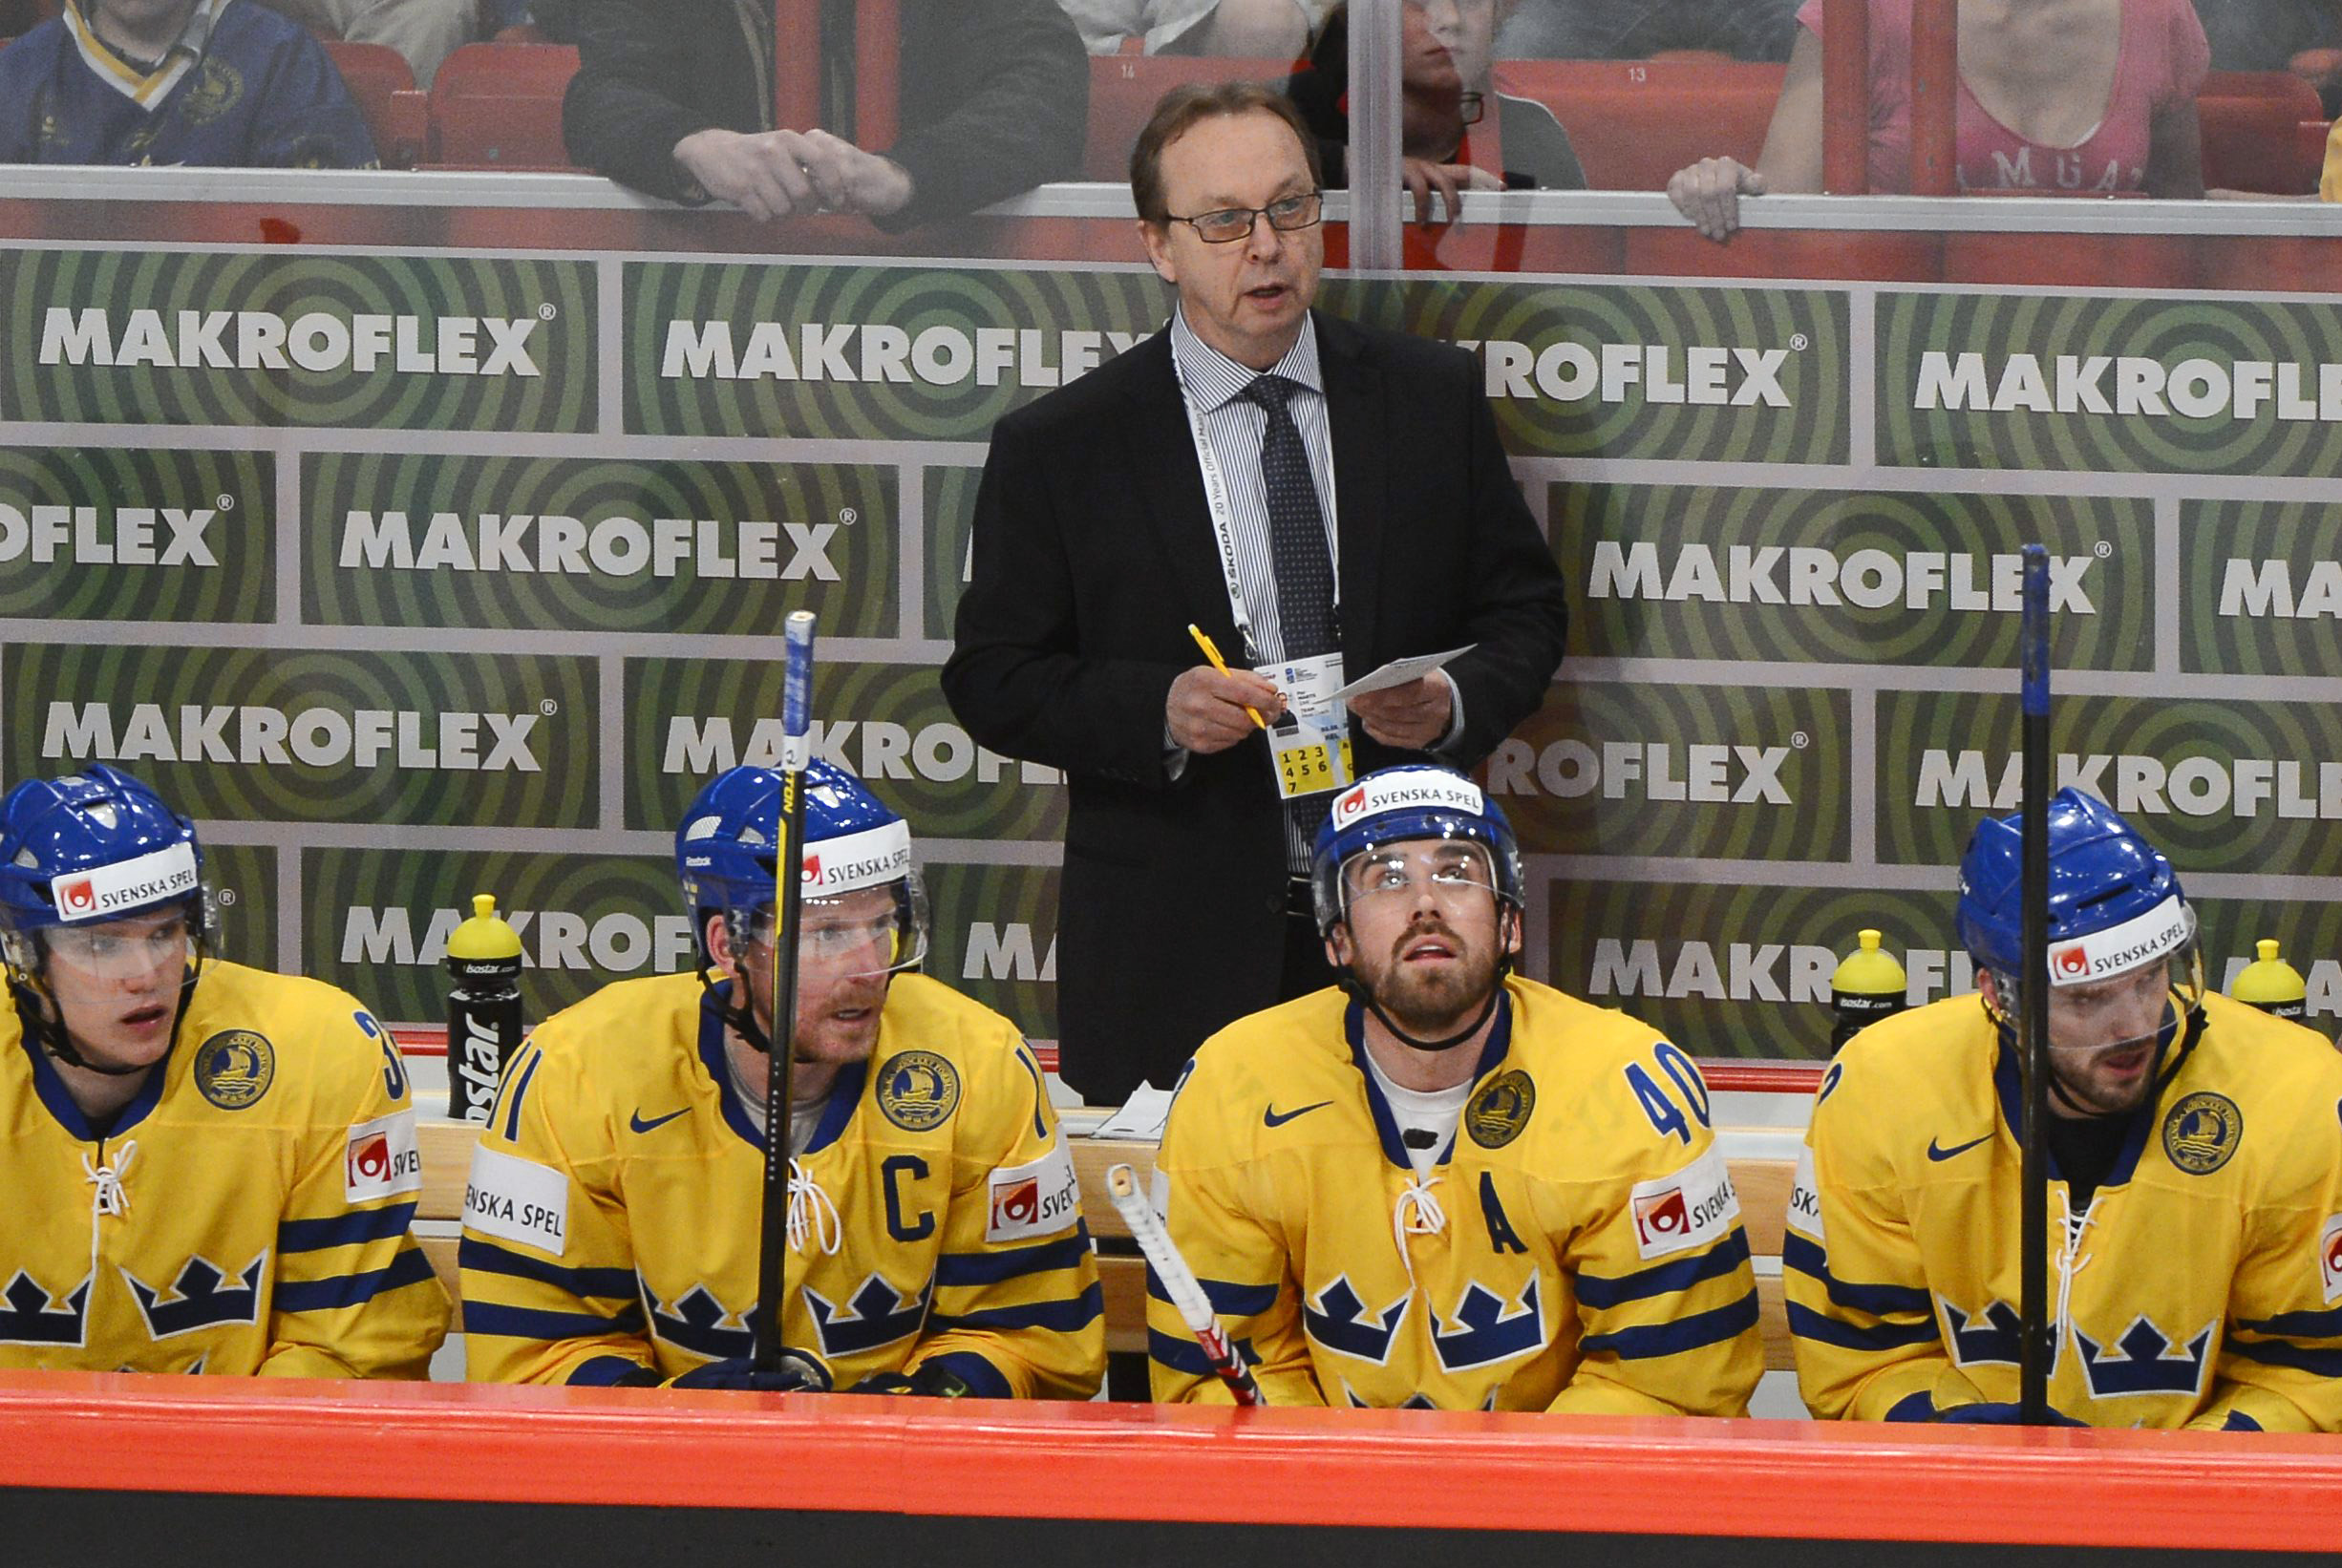 Tre Kronor, ishockey, Staffan Kronwall, Sverige